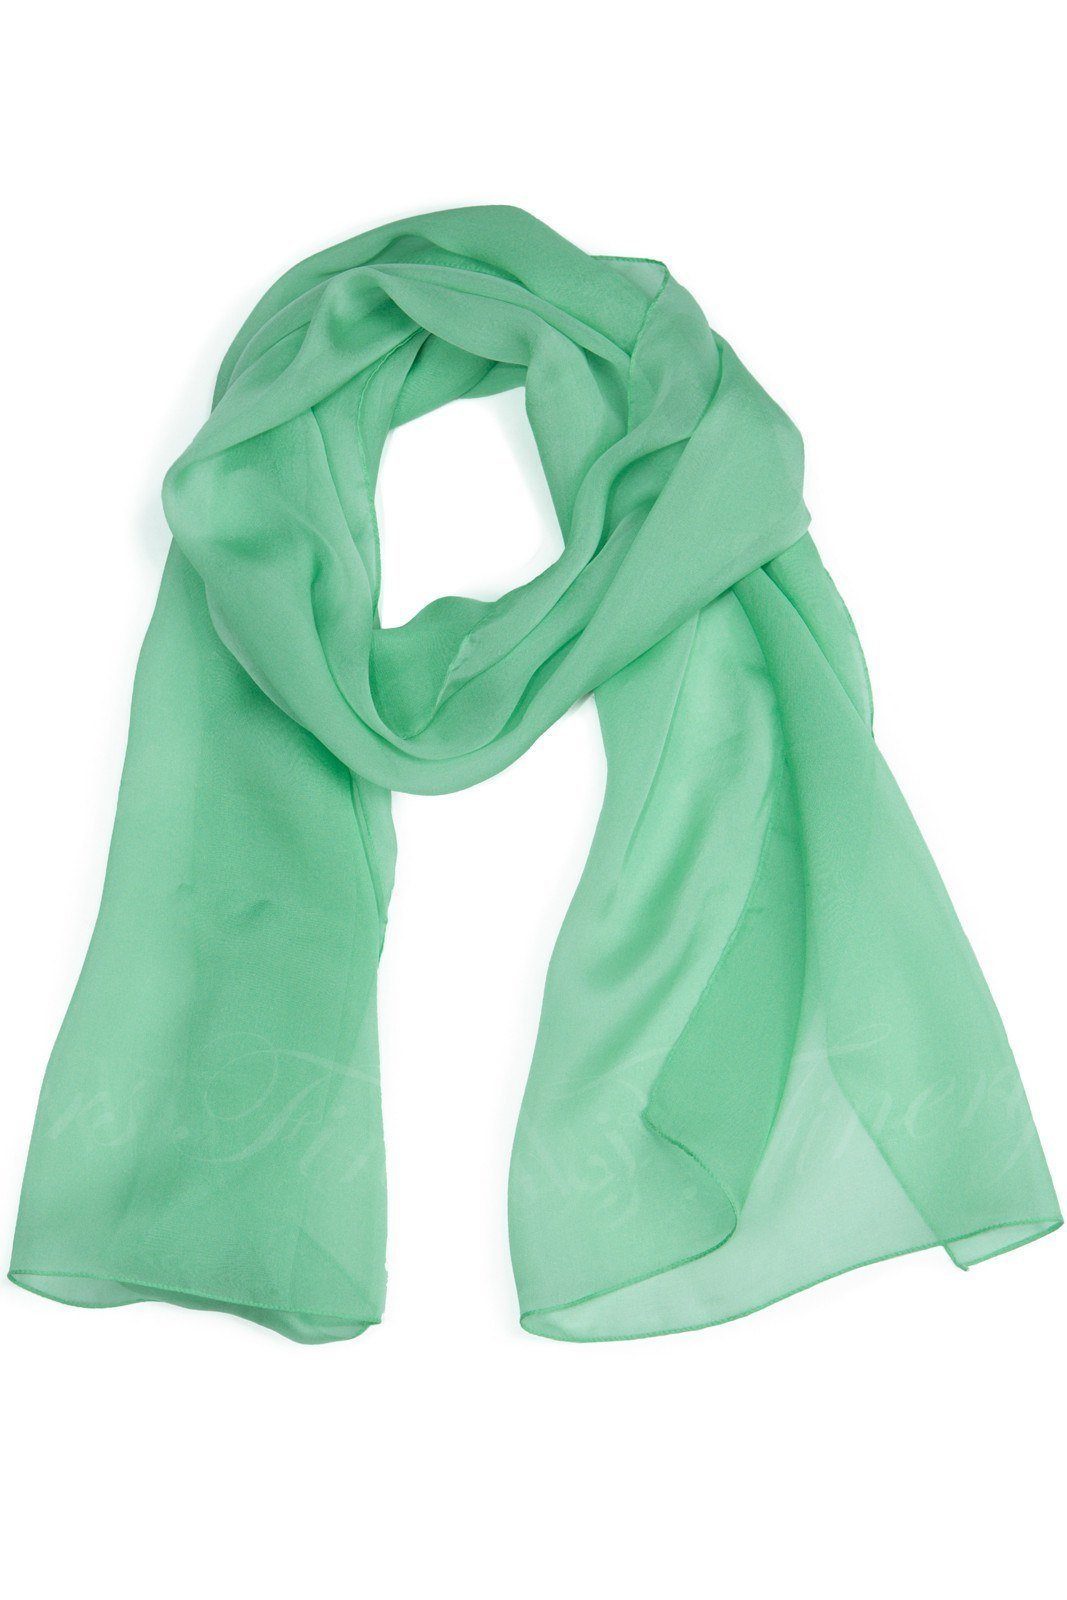 Women's 100% Italian Silk Chiffon Scarf Womens>Cold Weather Accessories>Scarf Fishers Finery One Size Sea Glass Green 